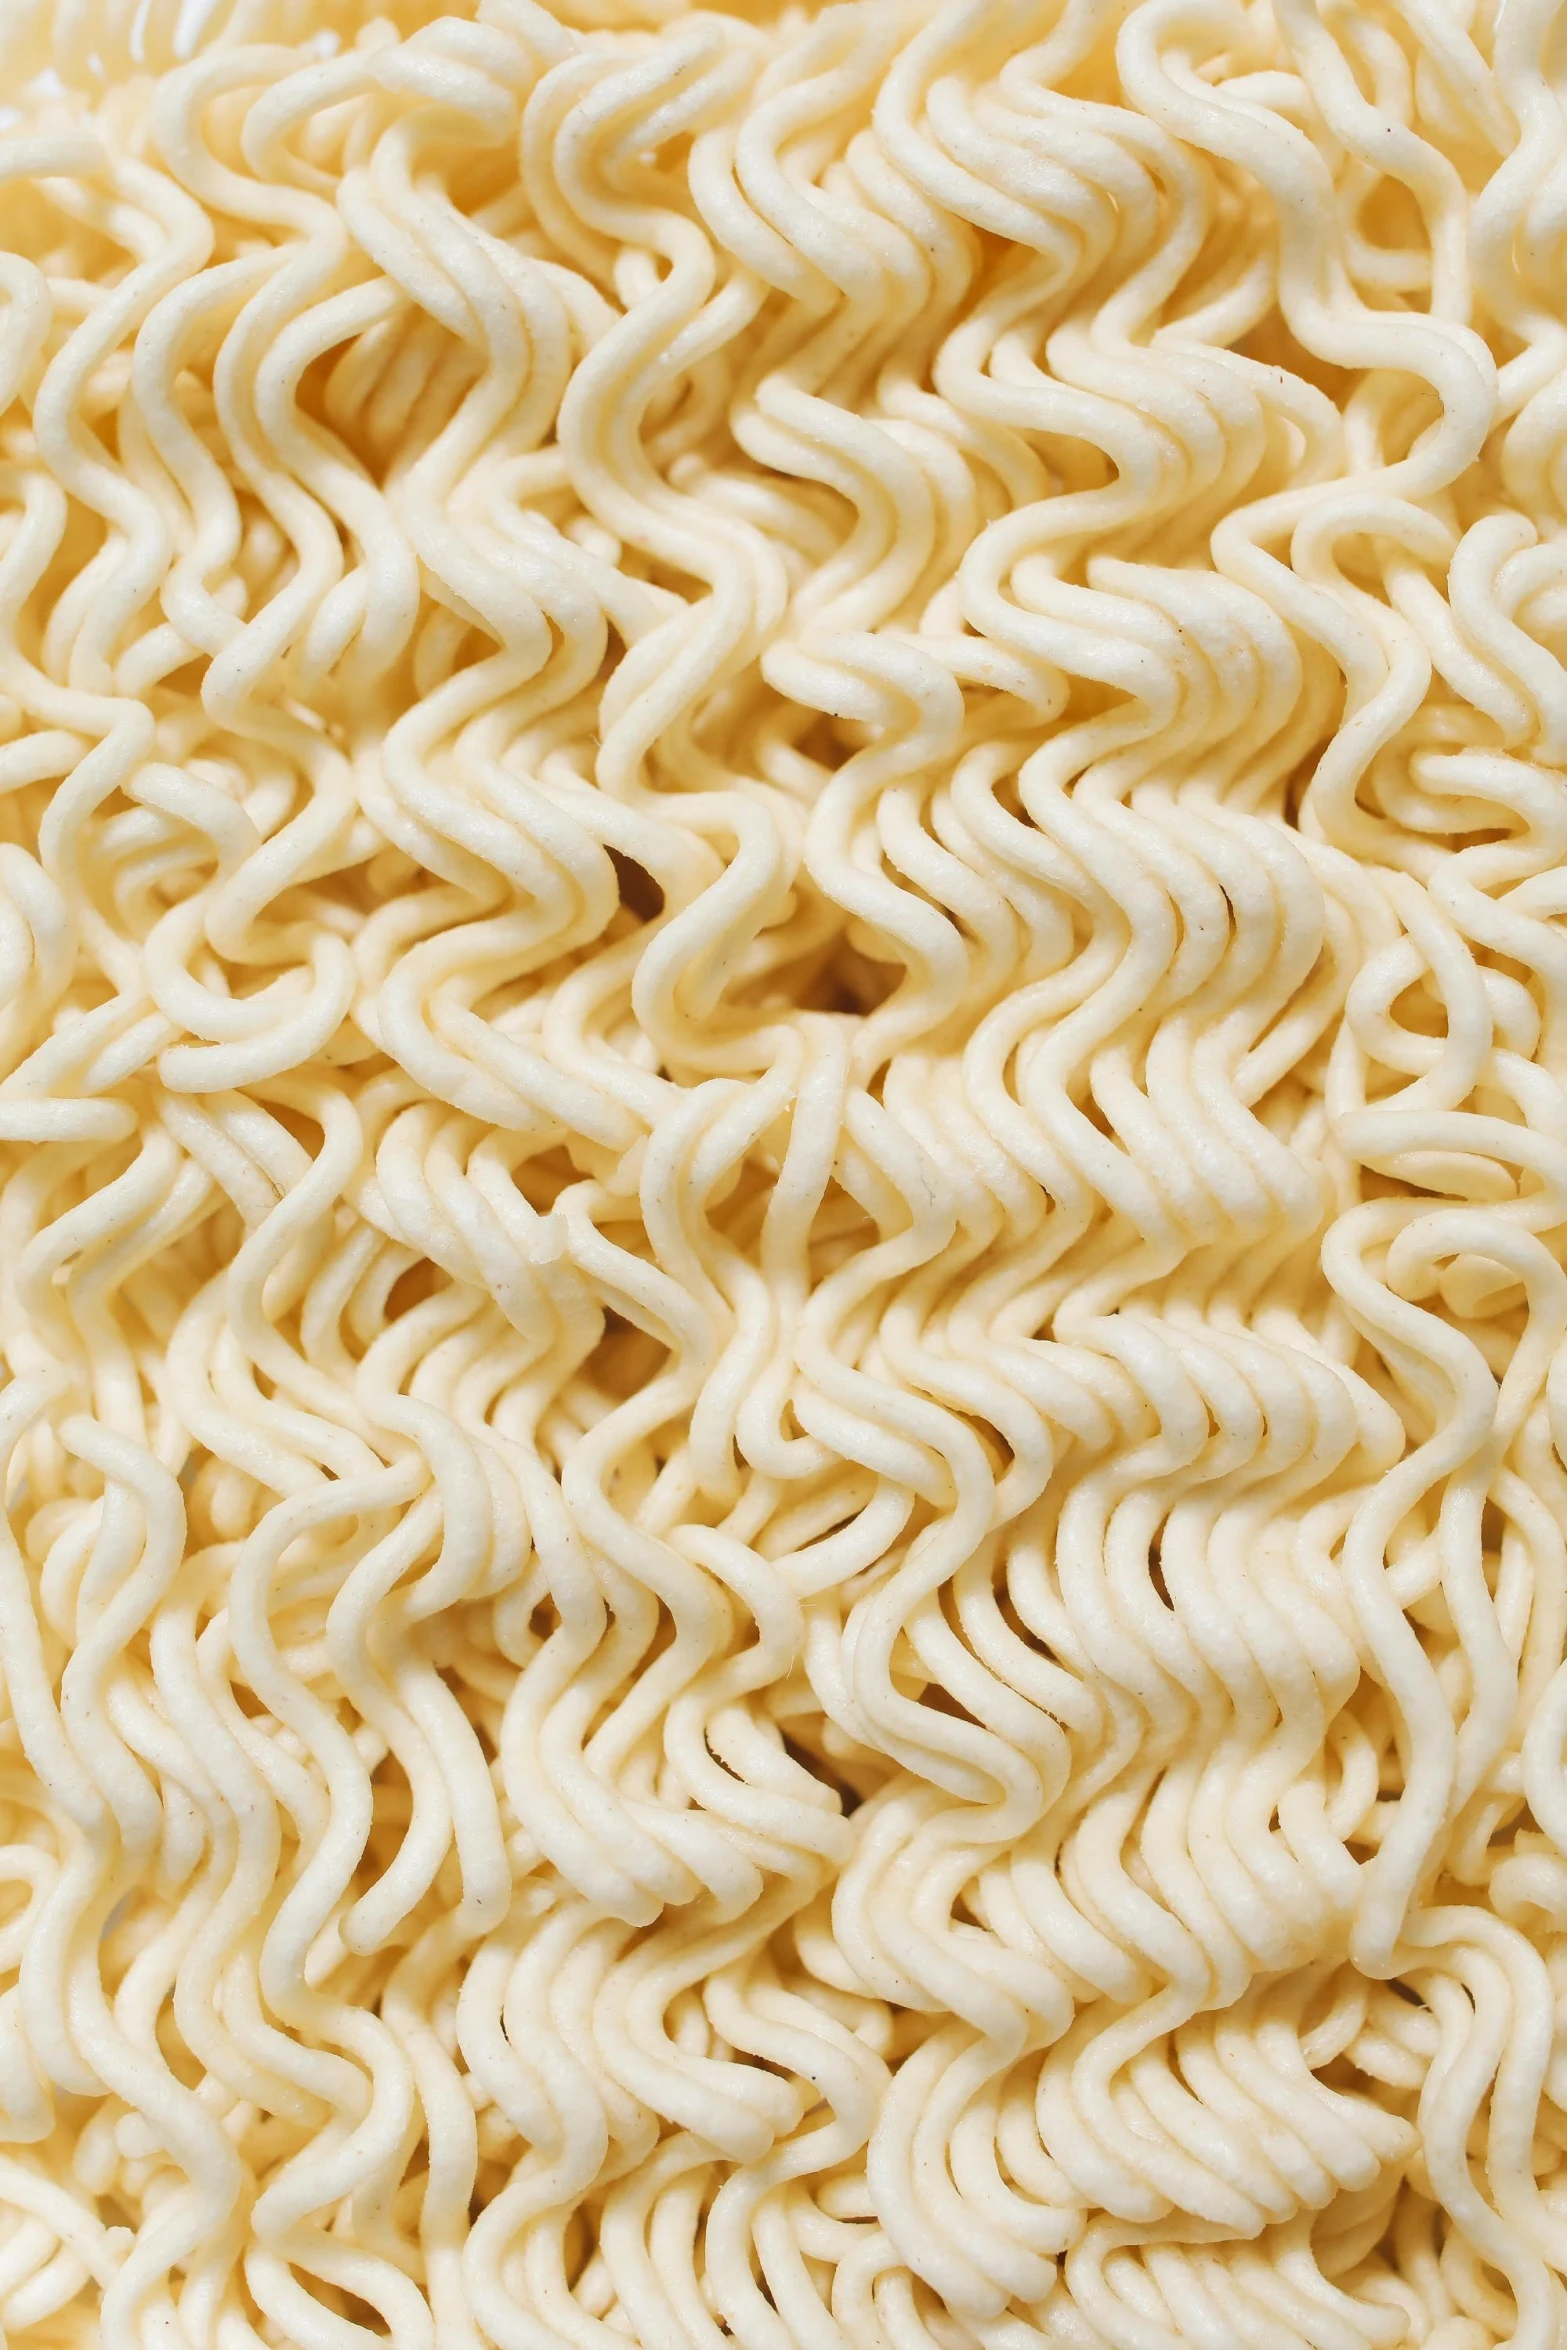 a close - up po of ramen noodles